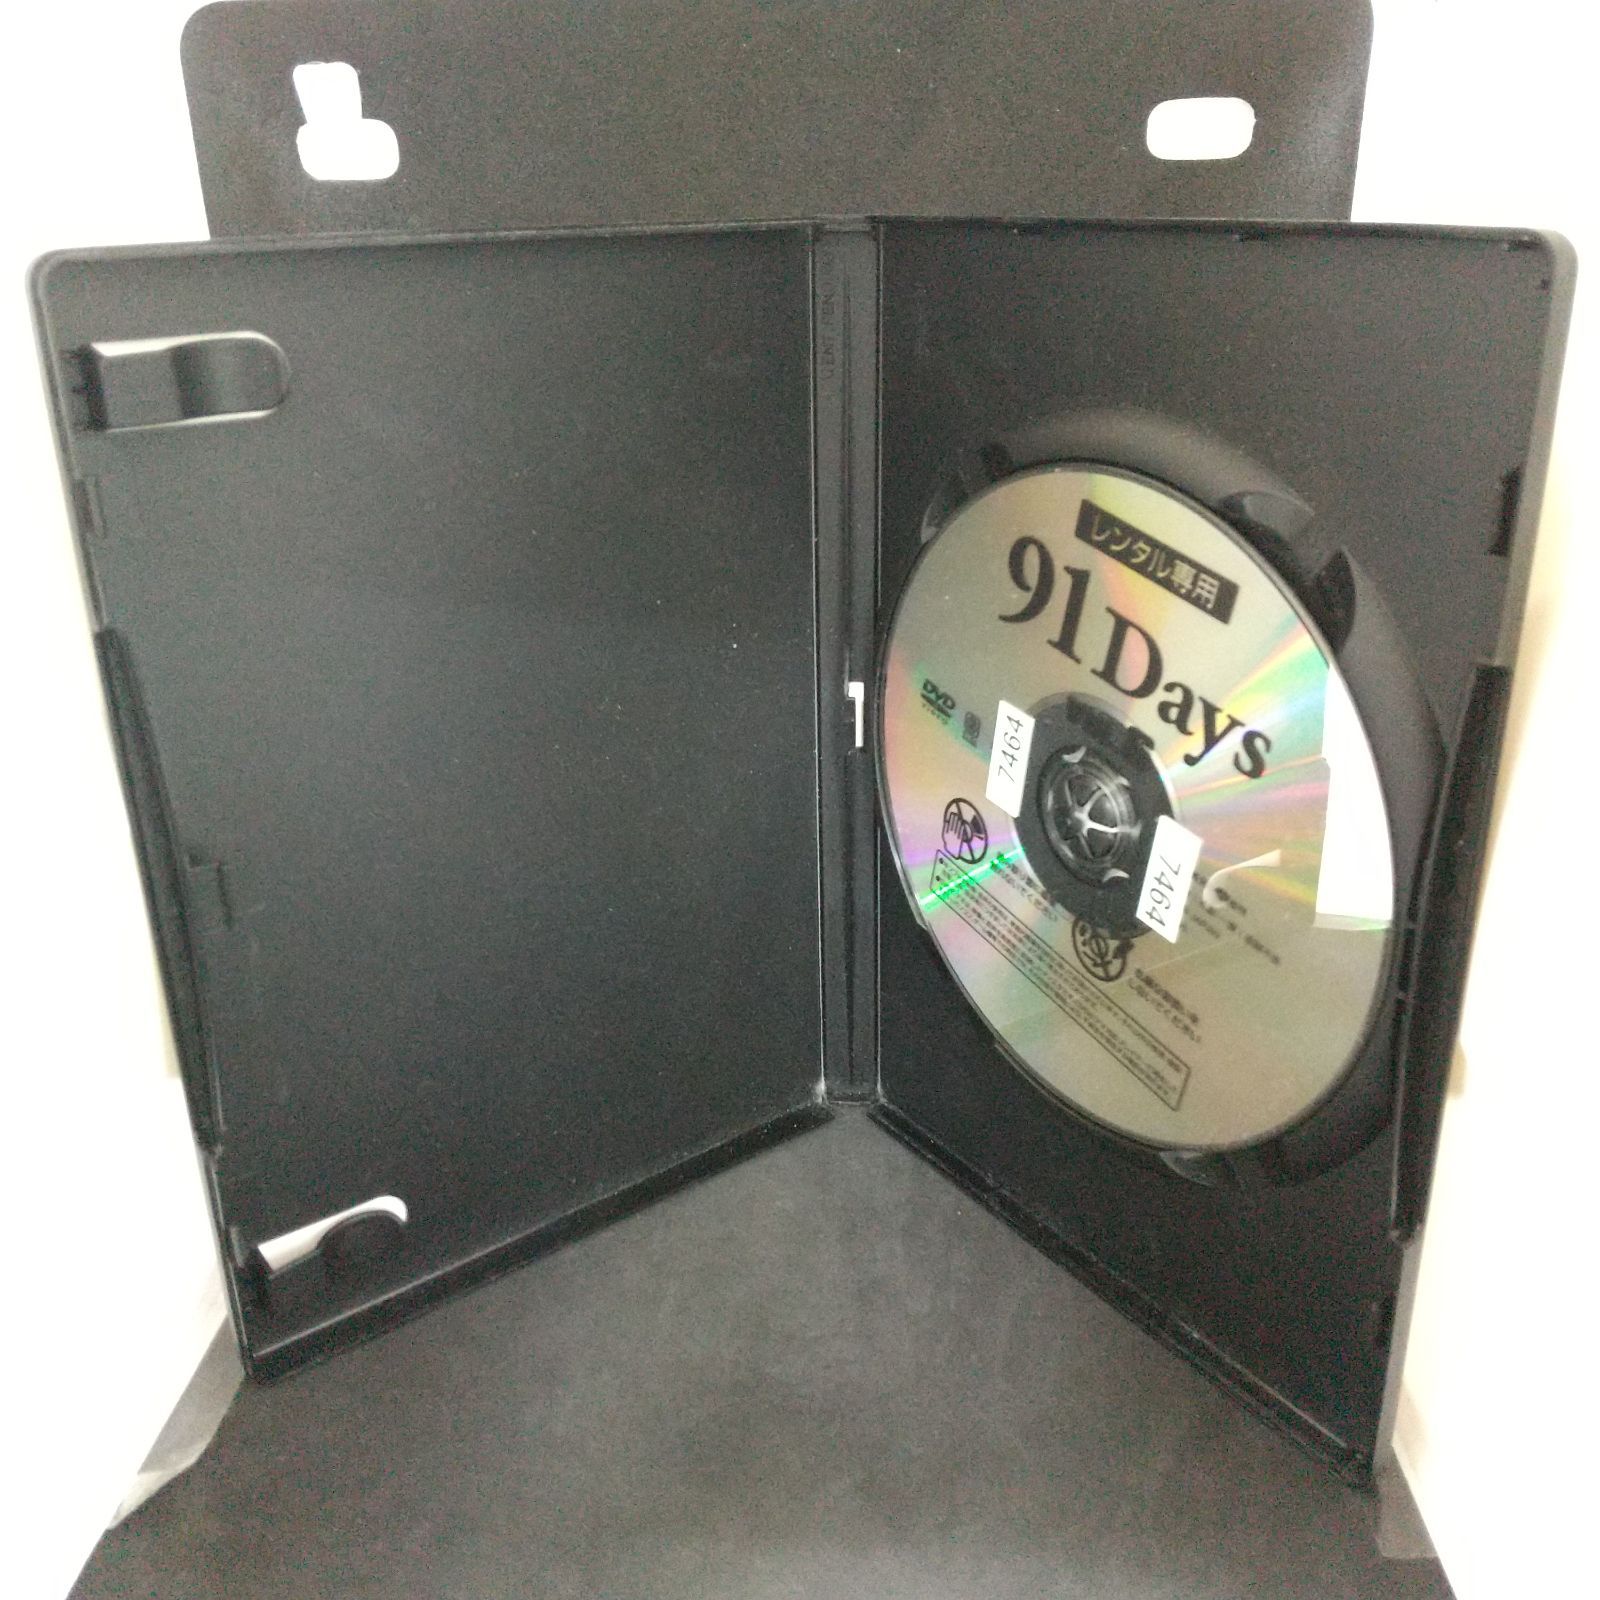 91Days VOL.6 レンタル専用 中古 DVD ケース付き - メルカリ